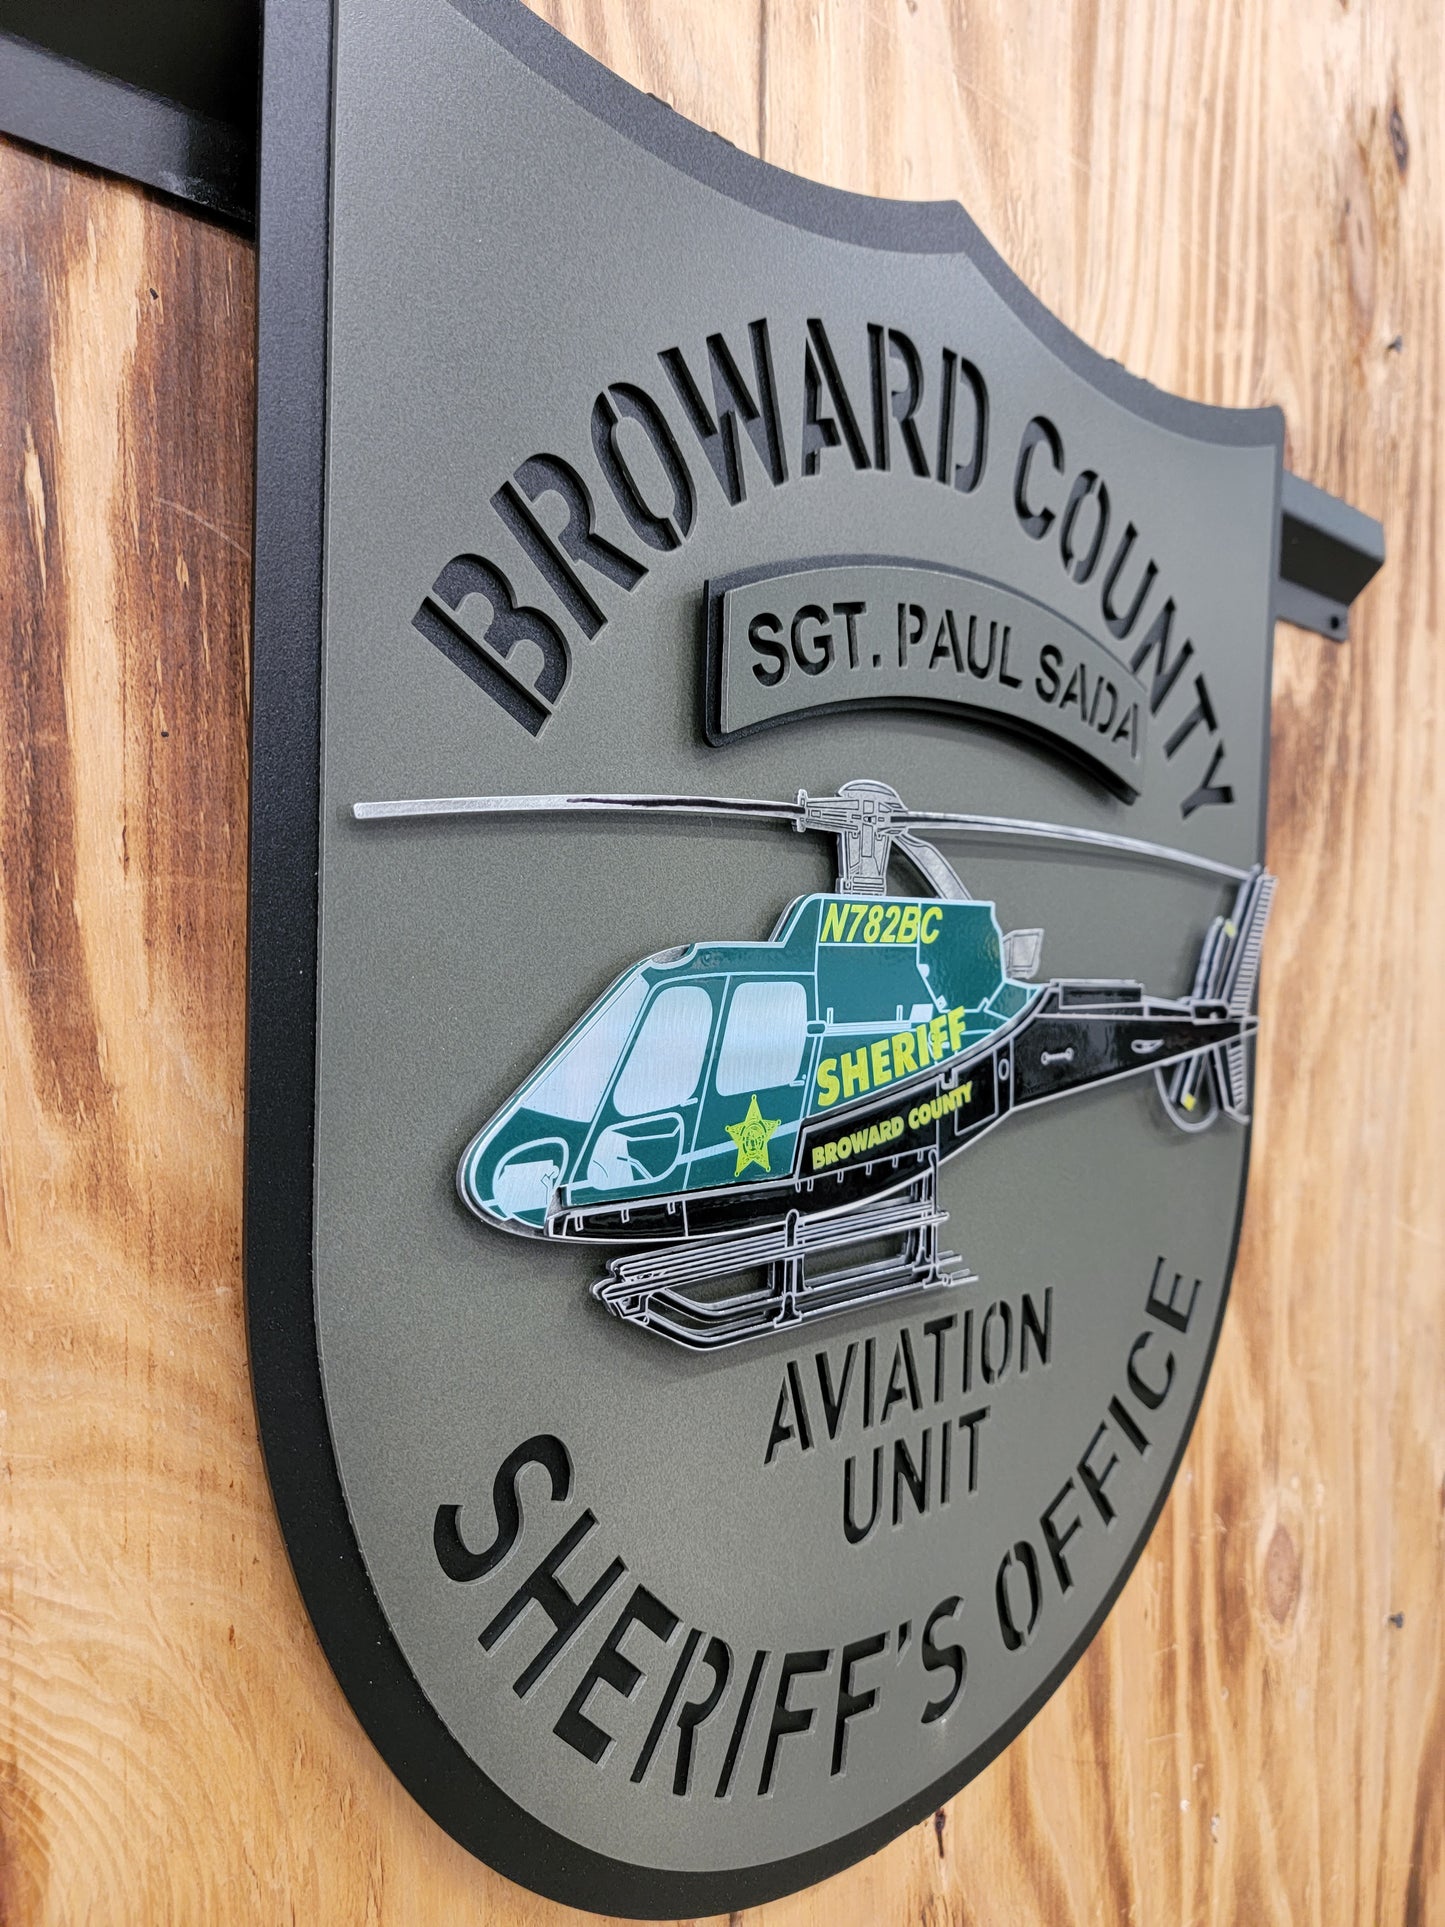 Broward County Aviation Unit